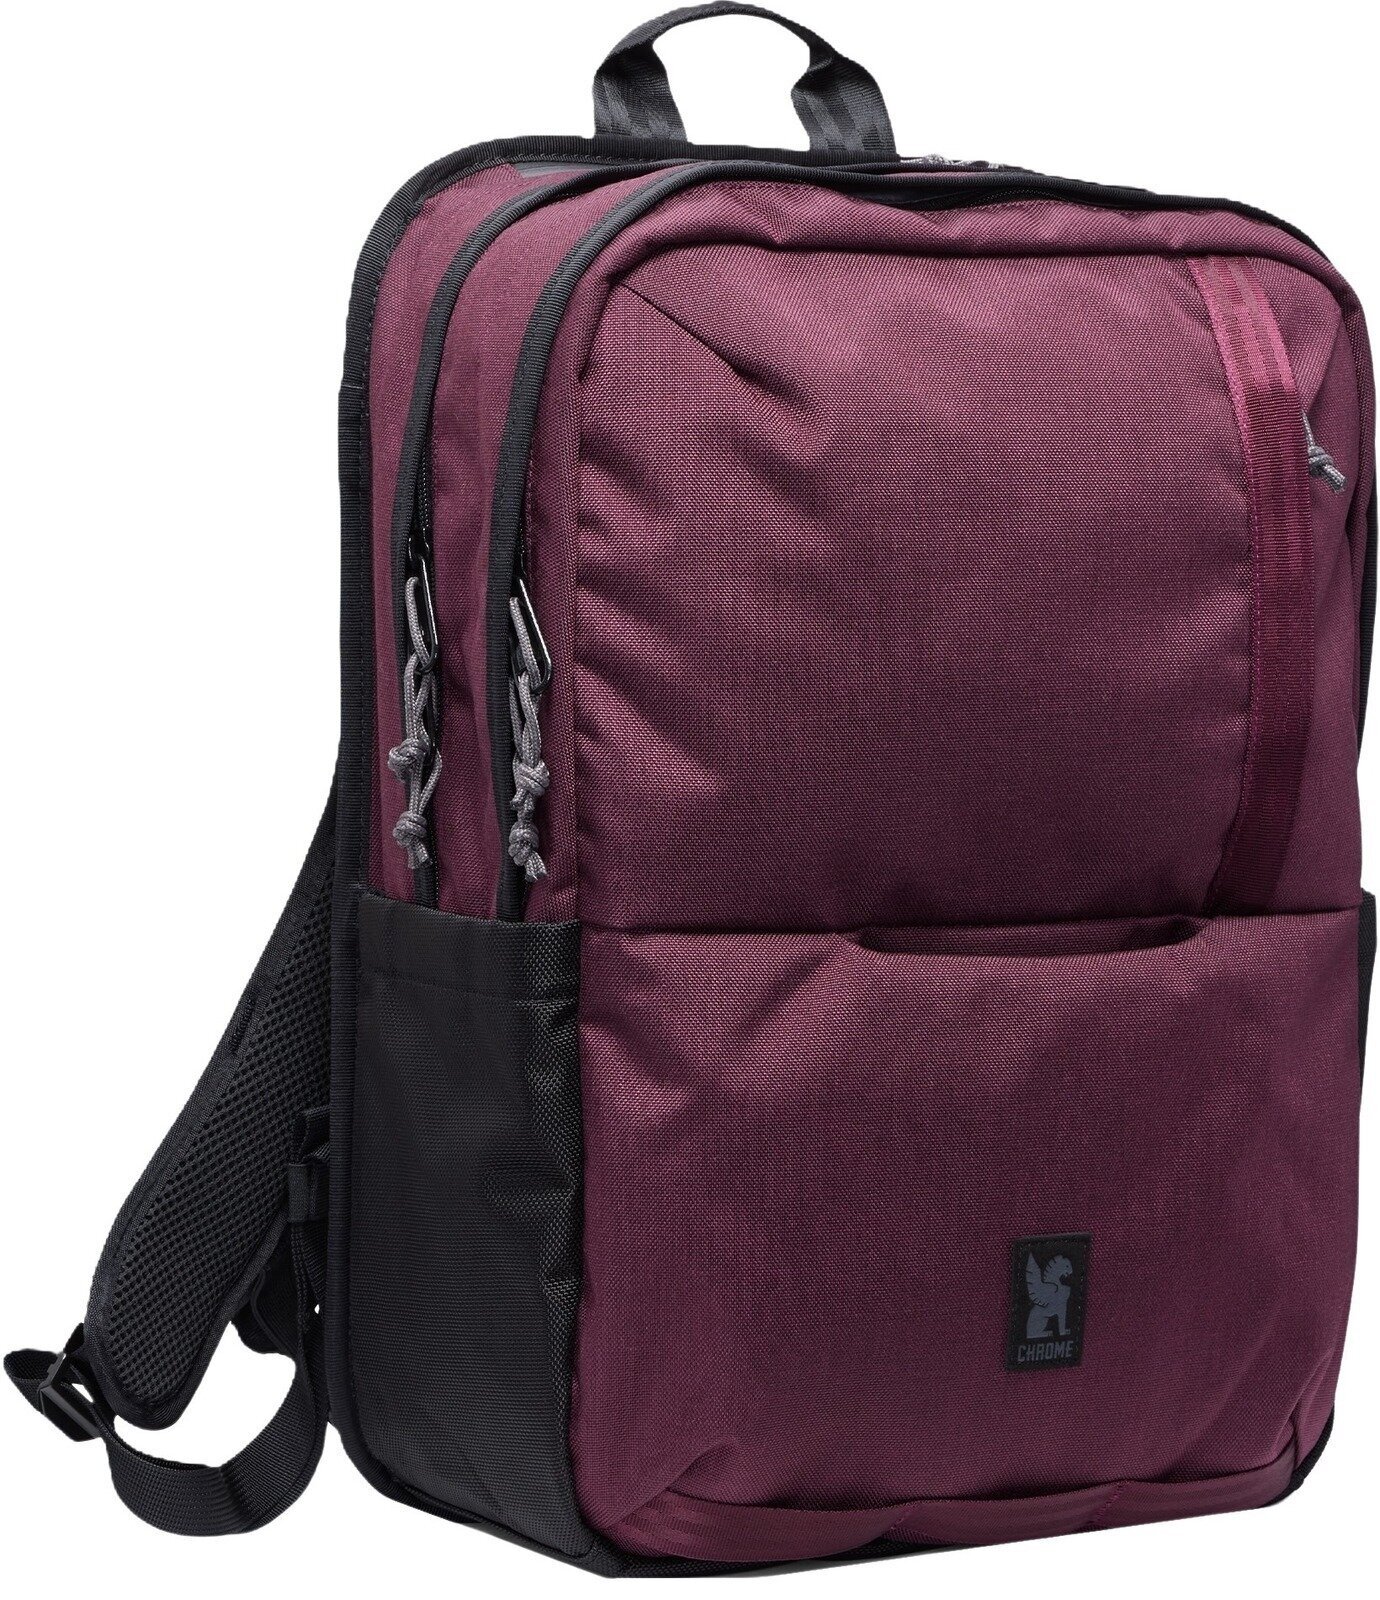 Lifestyle Rucksäck / Tasche Chrome Hawes Backpack Royale 26 L Rucksack